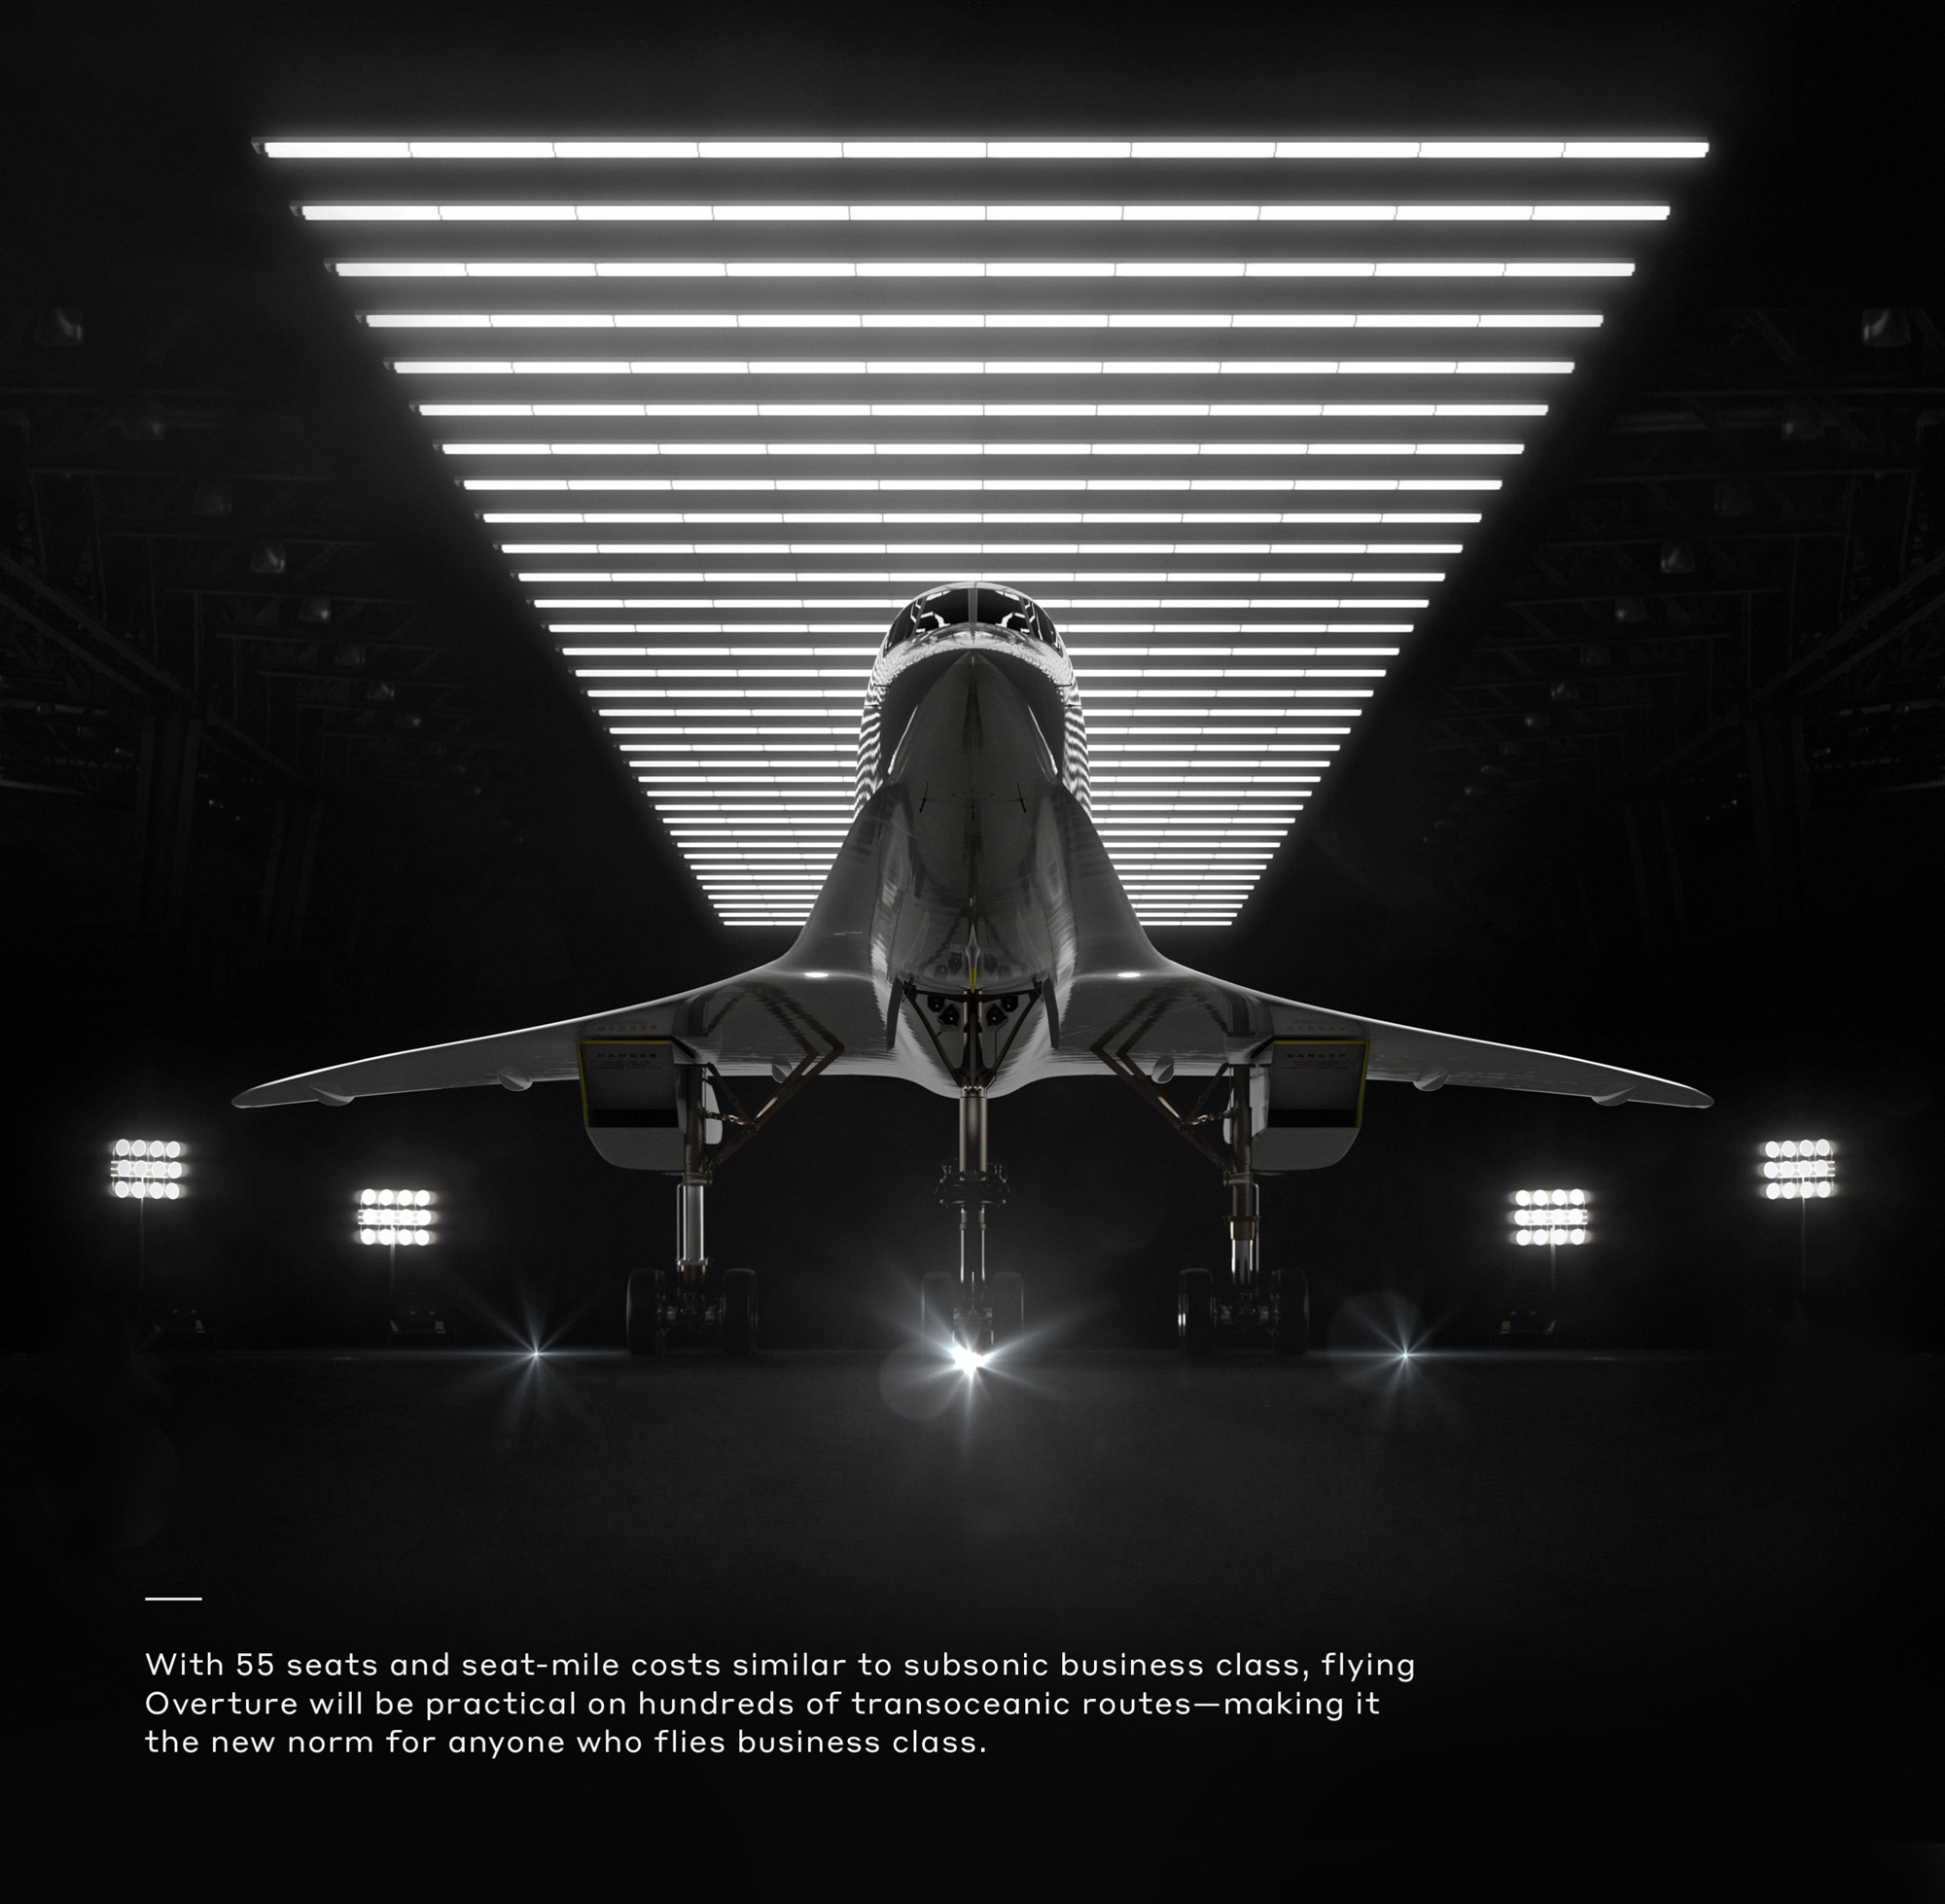 Imagen 003 Overture avion supersonico Boom